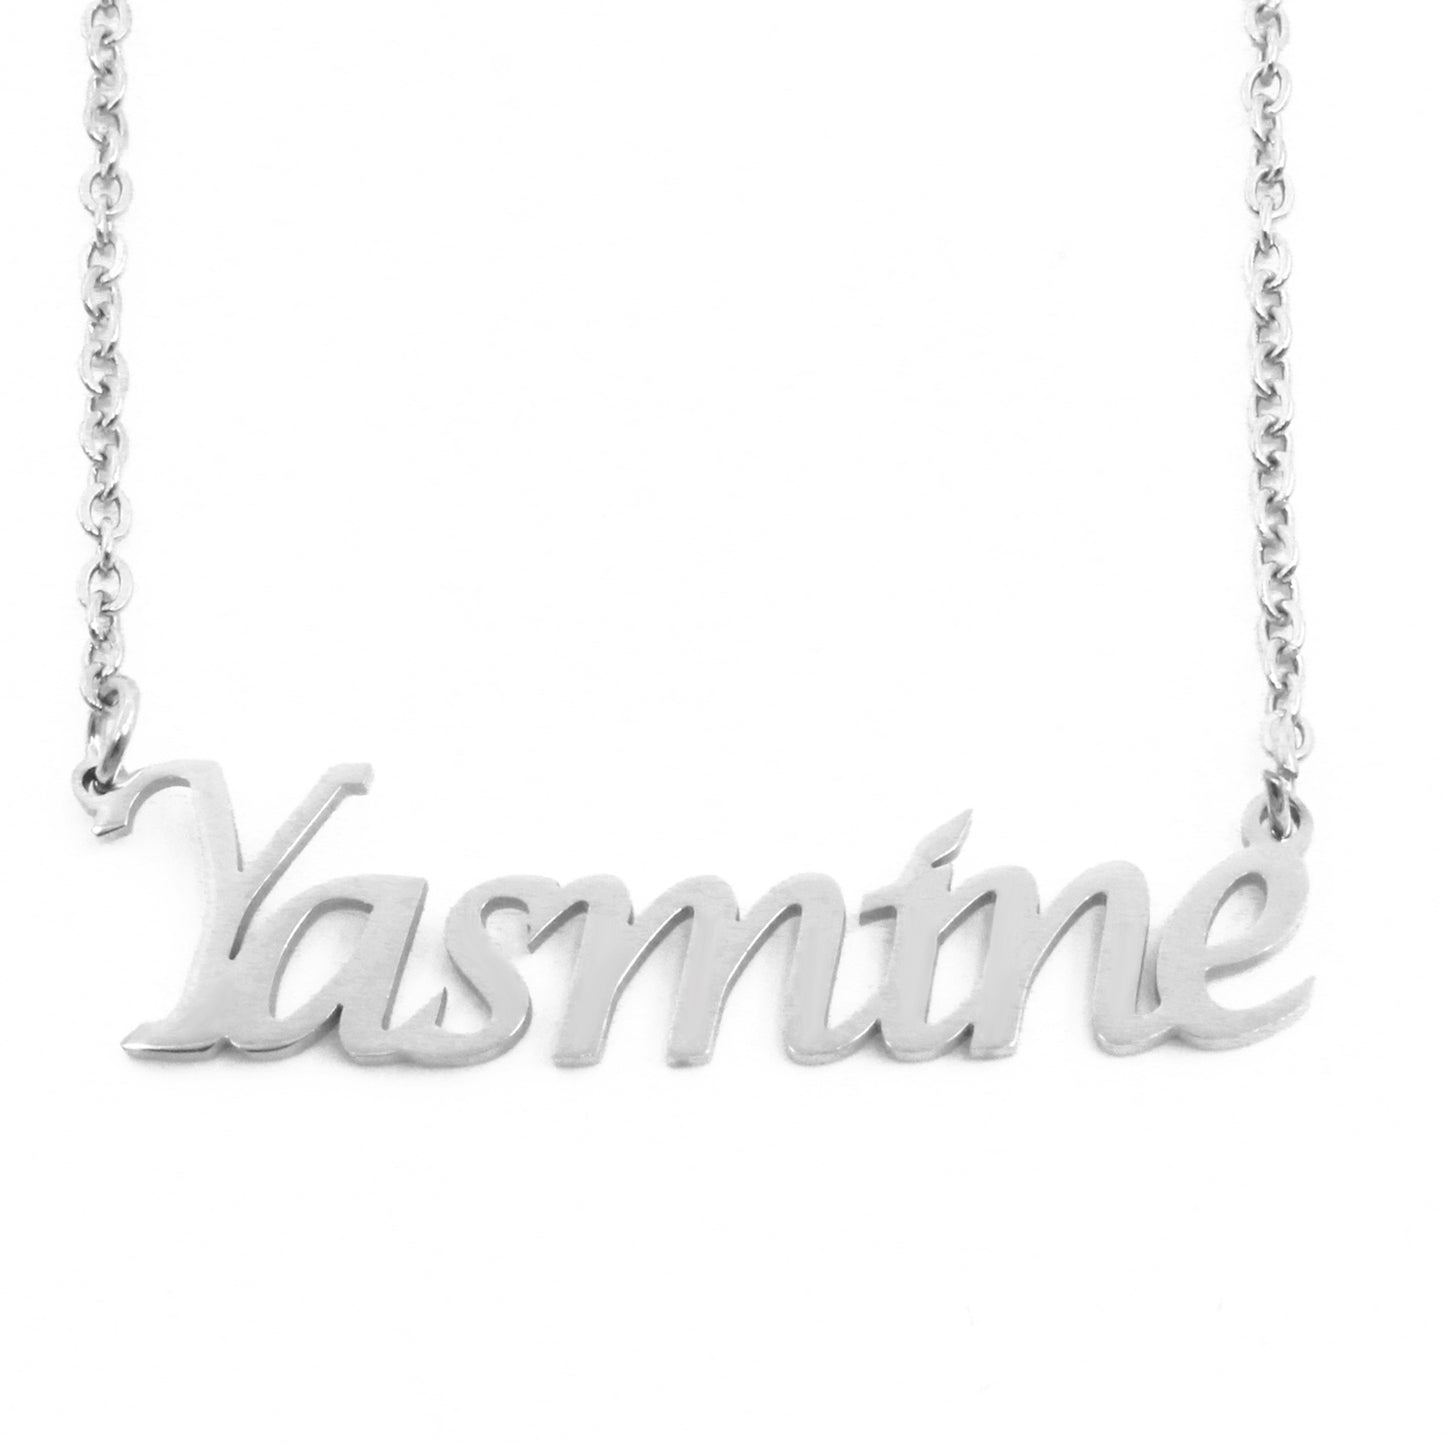 Yasmine Name Necklace